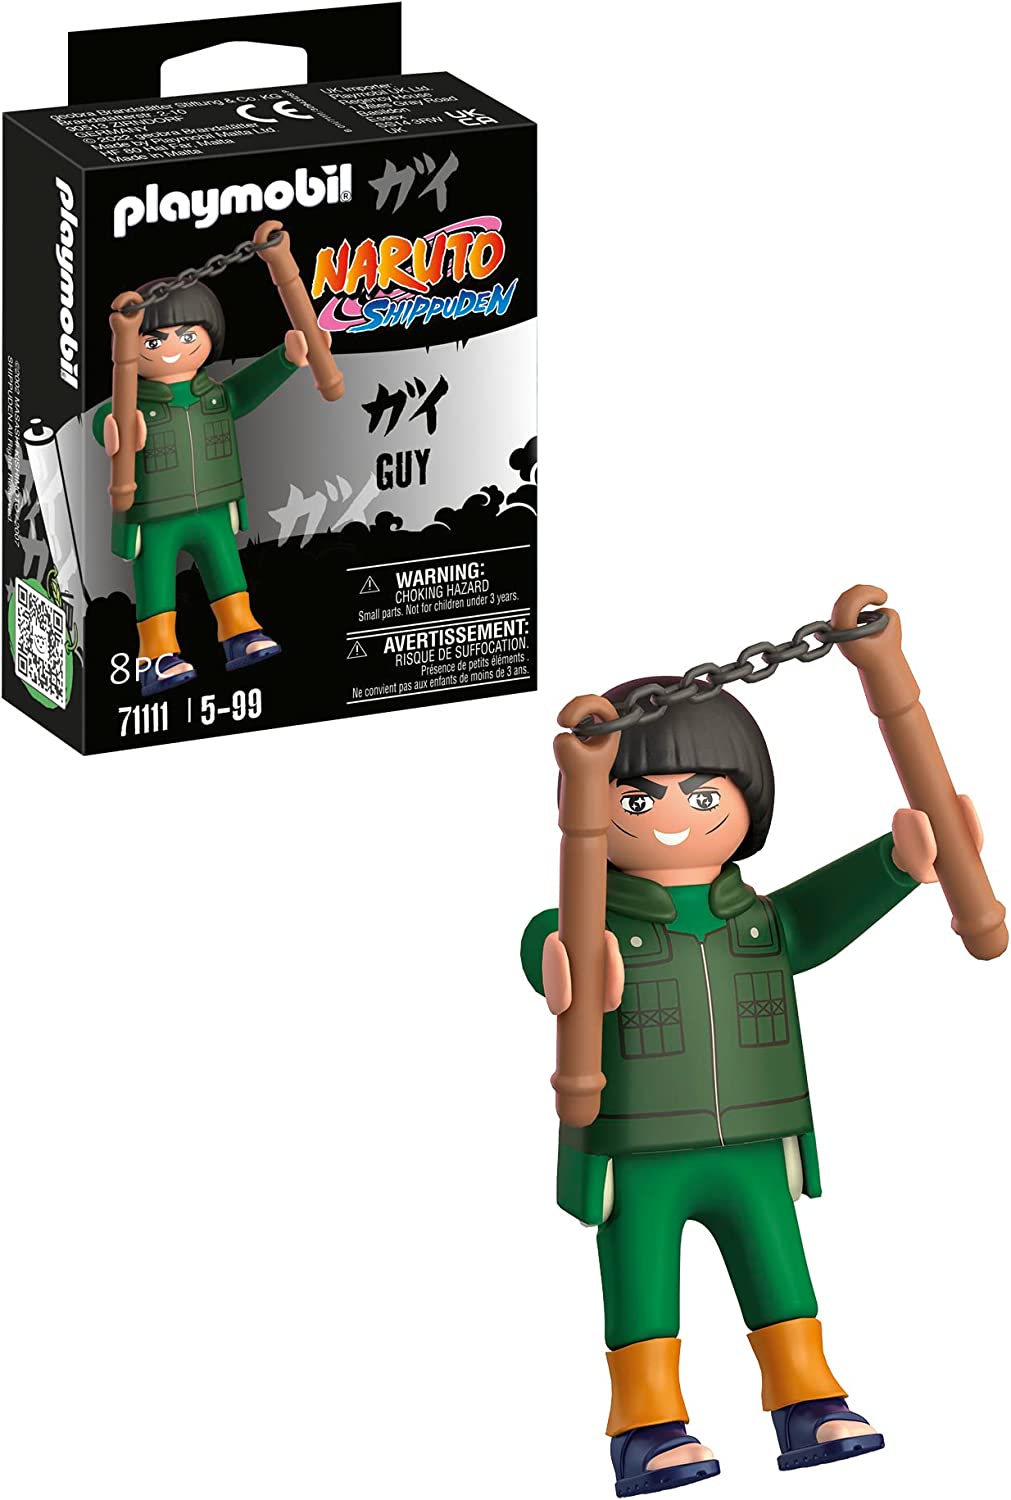 Playmobil 71111 Naruto: Mighty Guy Figurenset